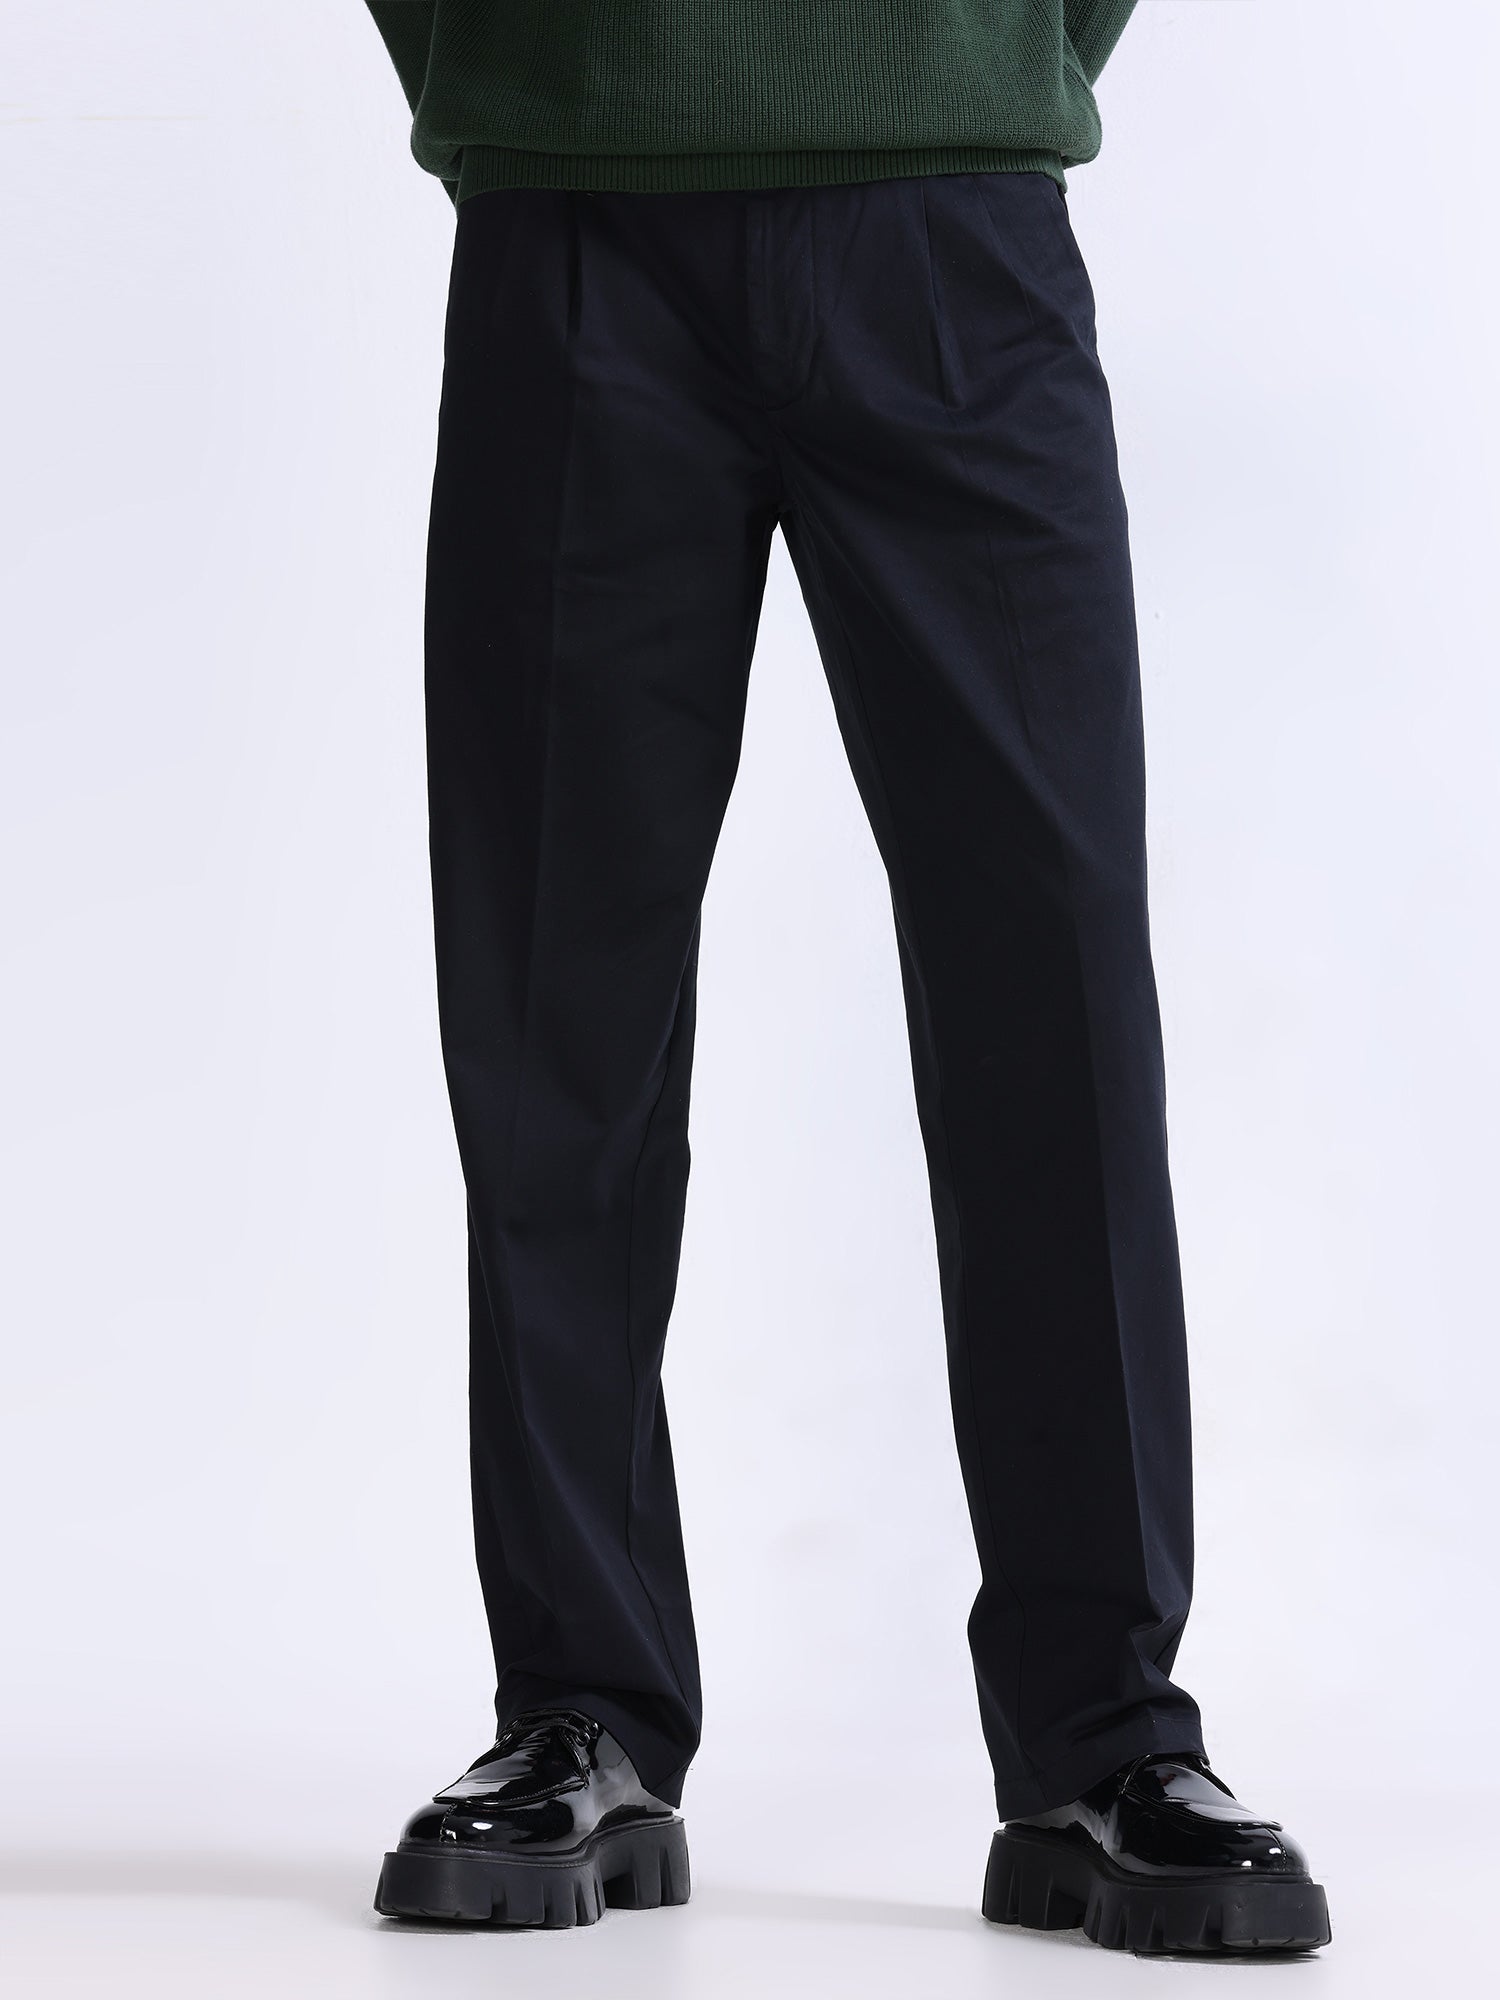 Buy Black Trousers Online in India at Best Price - Westside